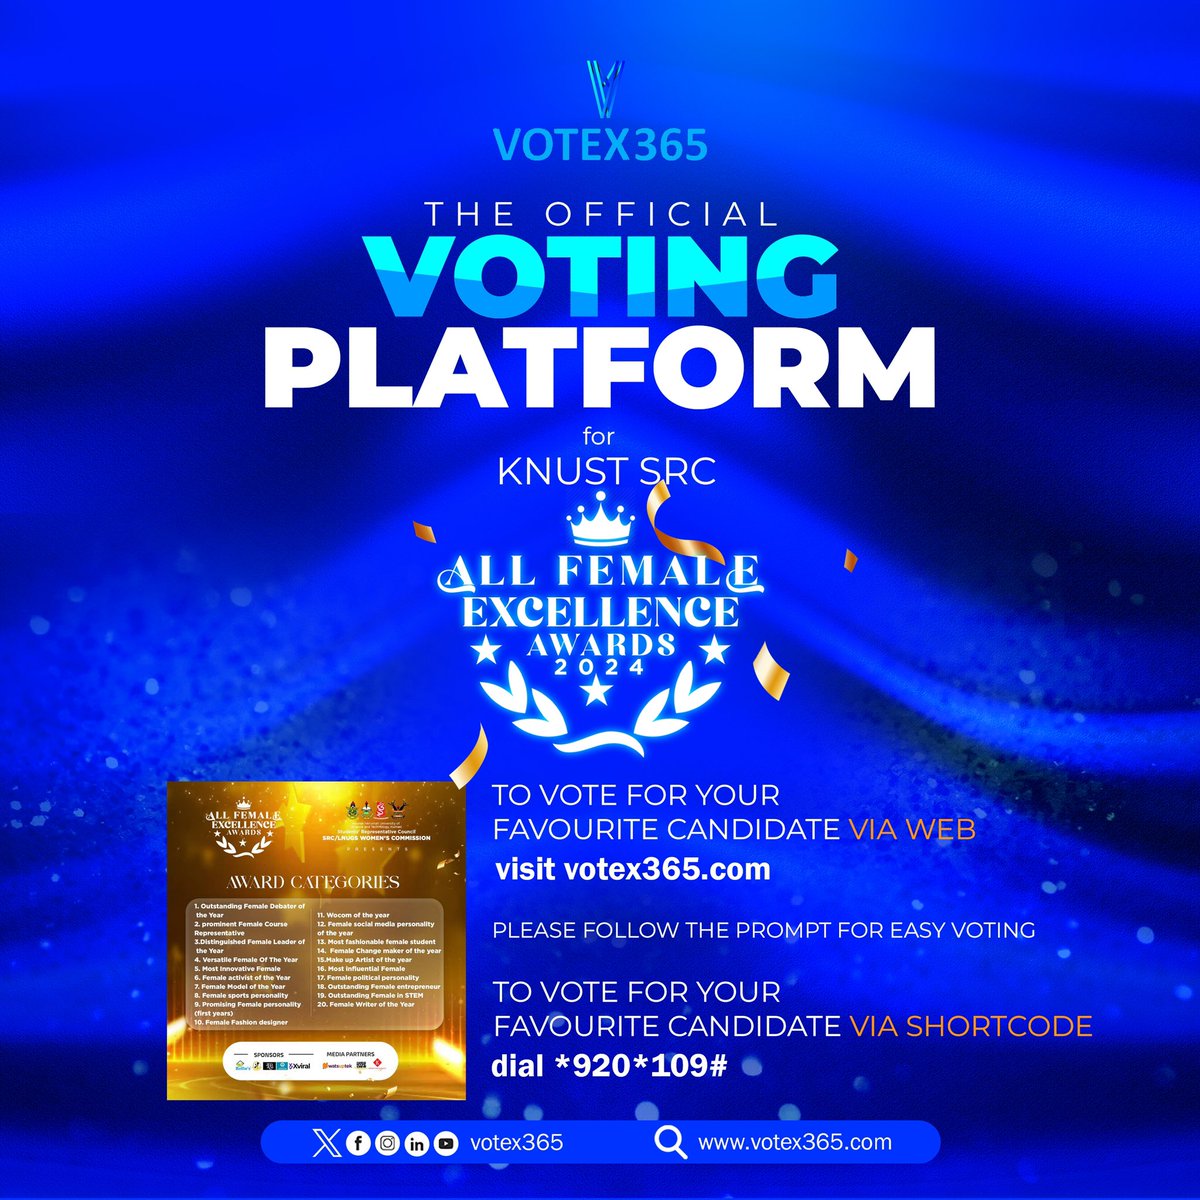 Don’t forget to vote via shortcode *920*190#
#votex #e-vote #digitalexperience